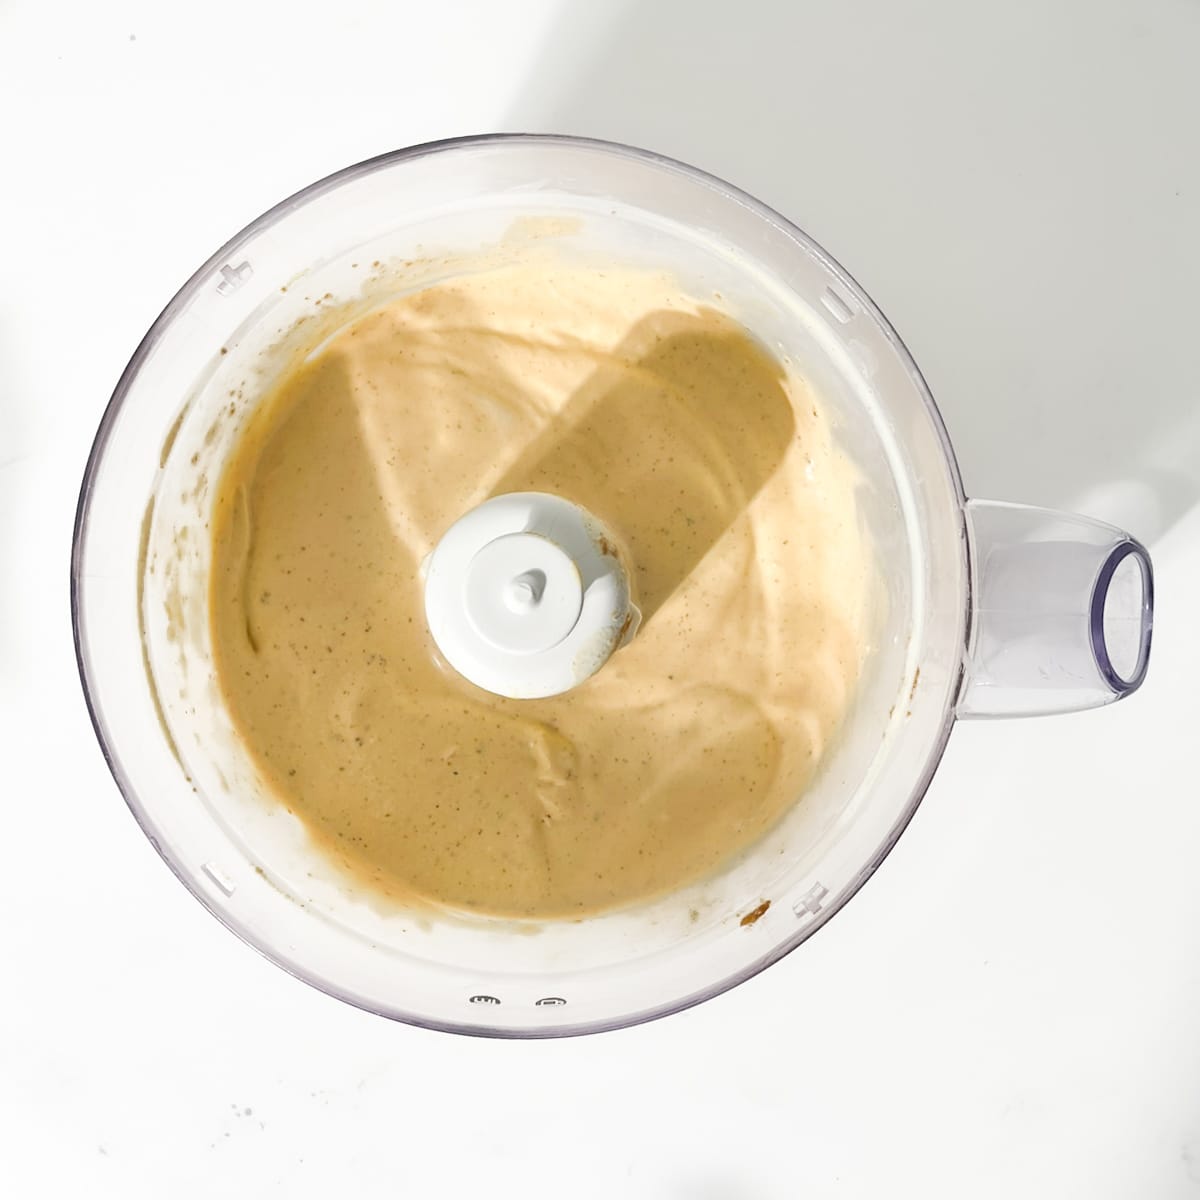 Blended milkshake in a food processor bowl.